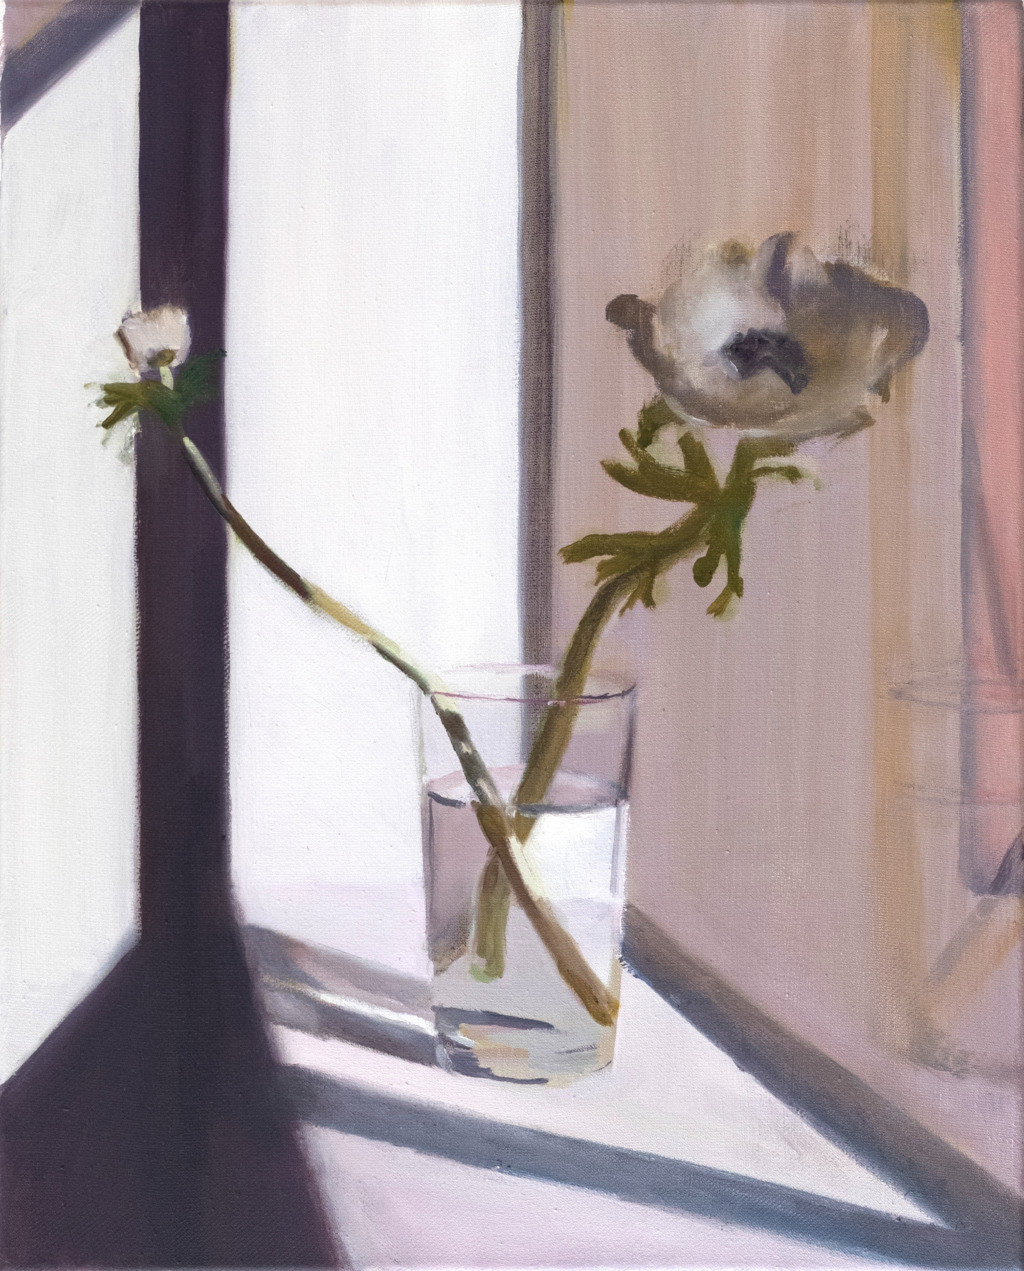 Andrea Muheim, Zwei AnemonenIV, 2019
Oil on canvas
50 x 40 cm